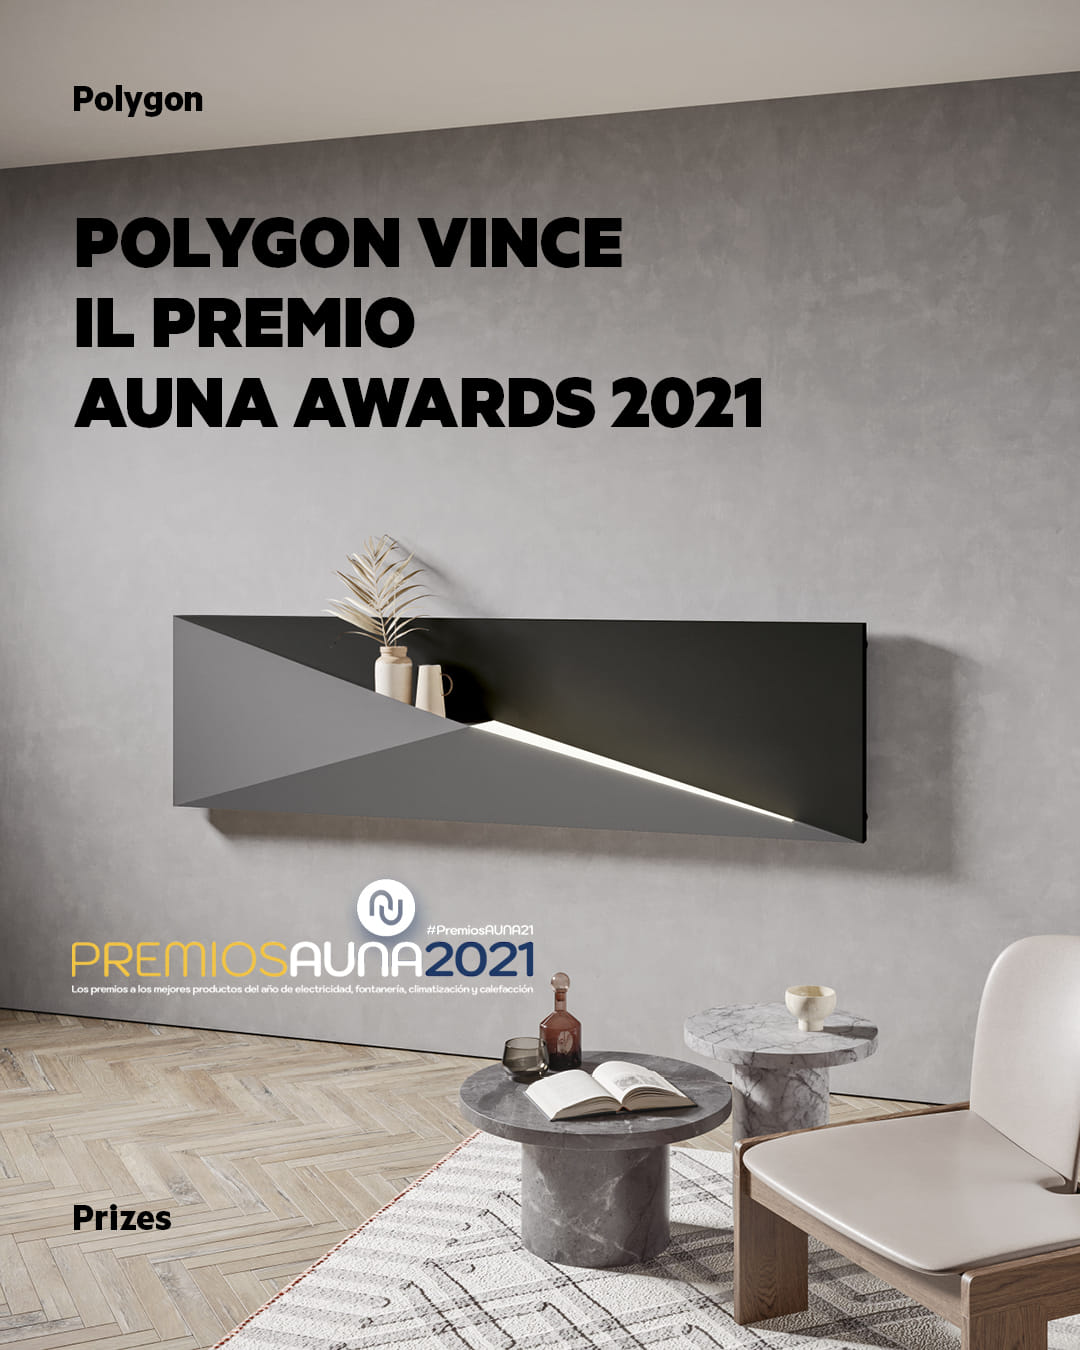 Polygon wins the AUNA Awards 2021